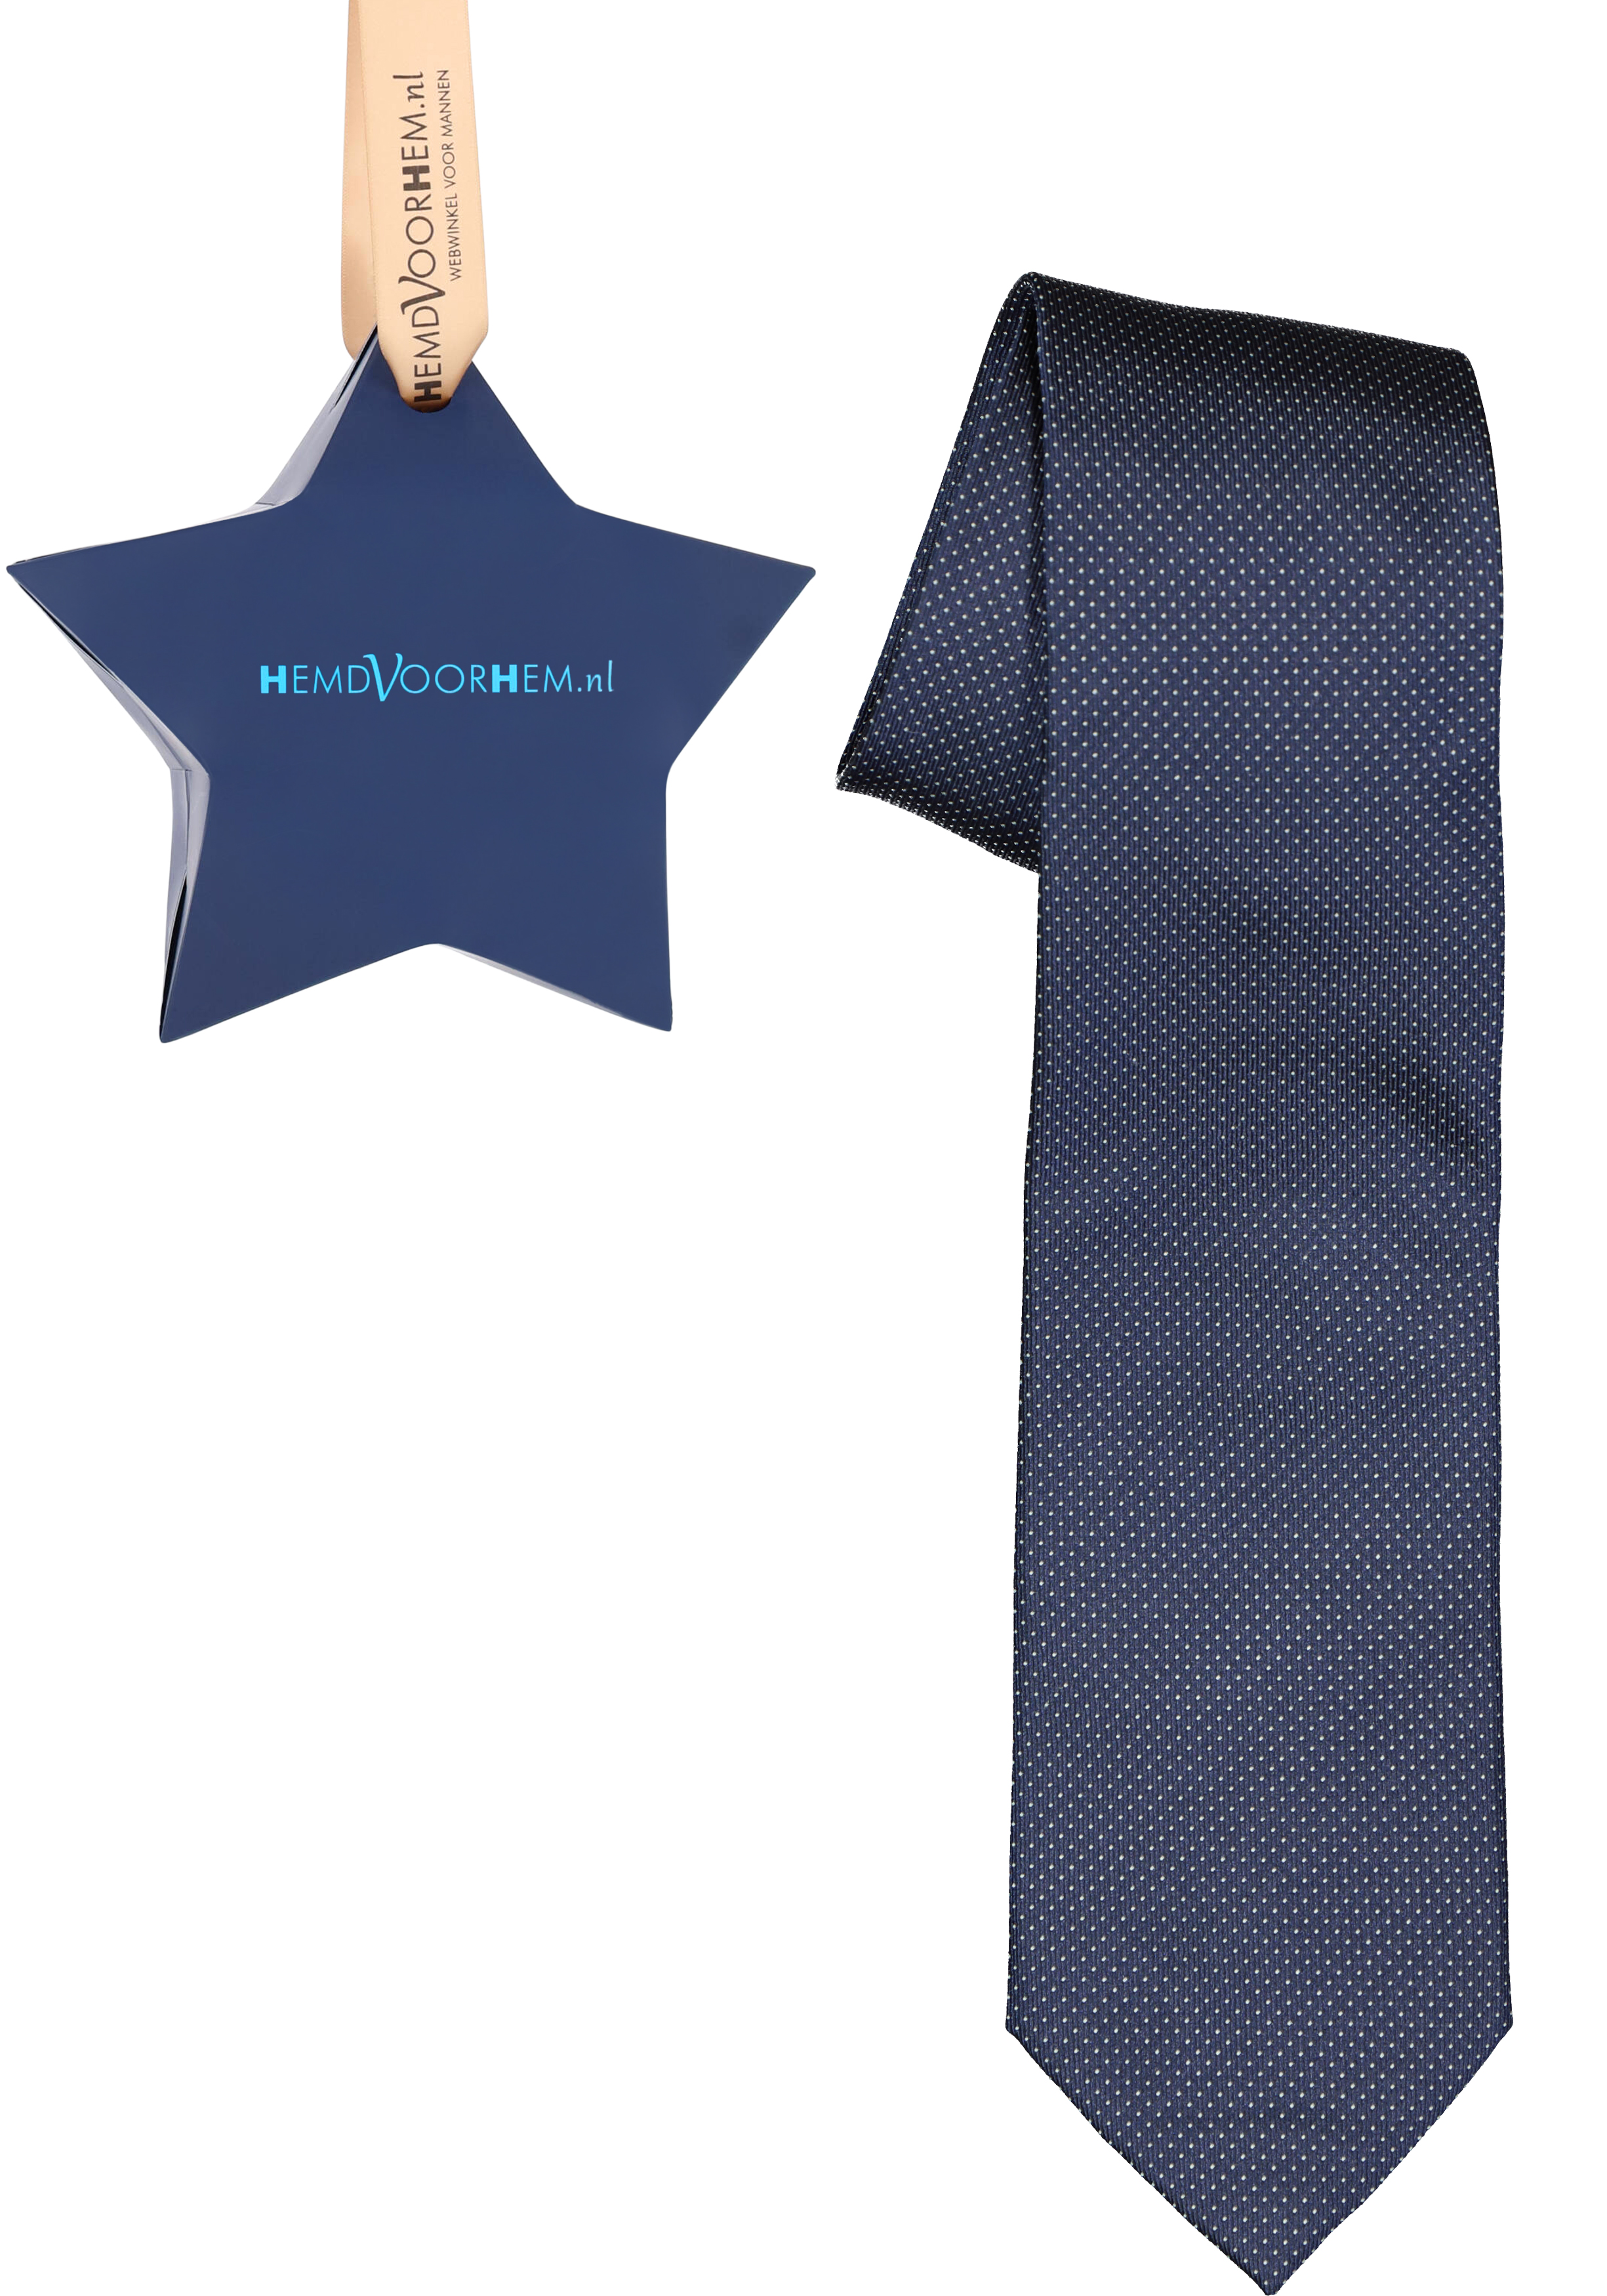 Cadeau Michaelis stropdas, donkerblauw met witte stipjes in cadeauverpakking